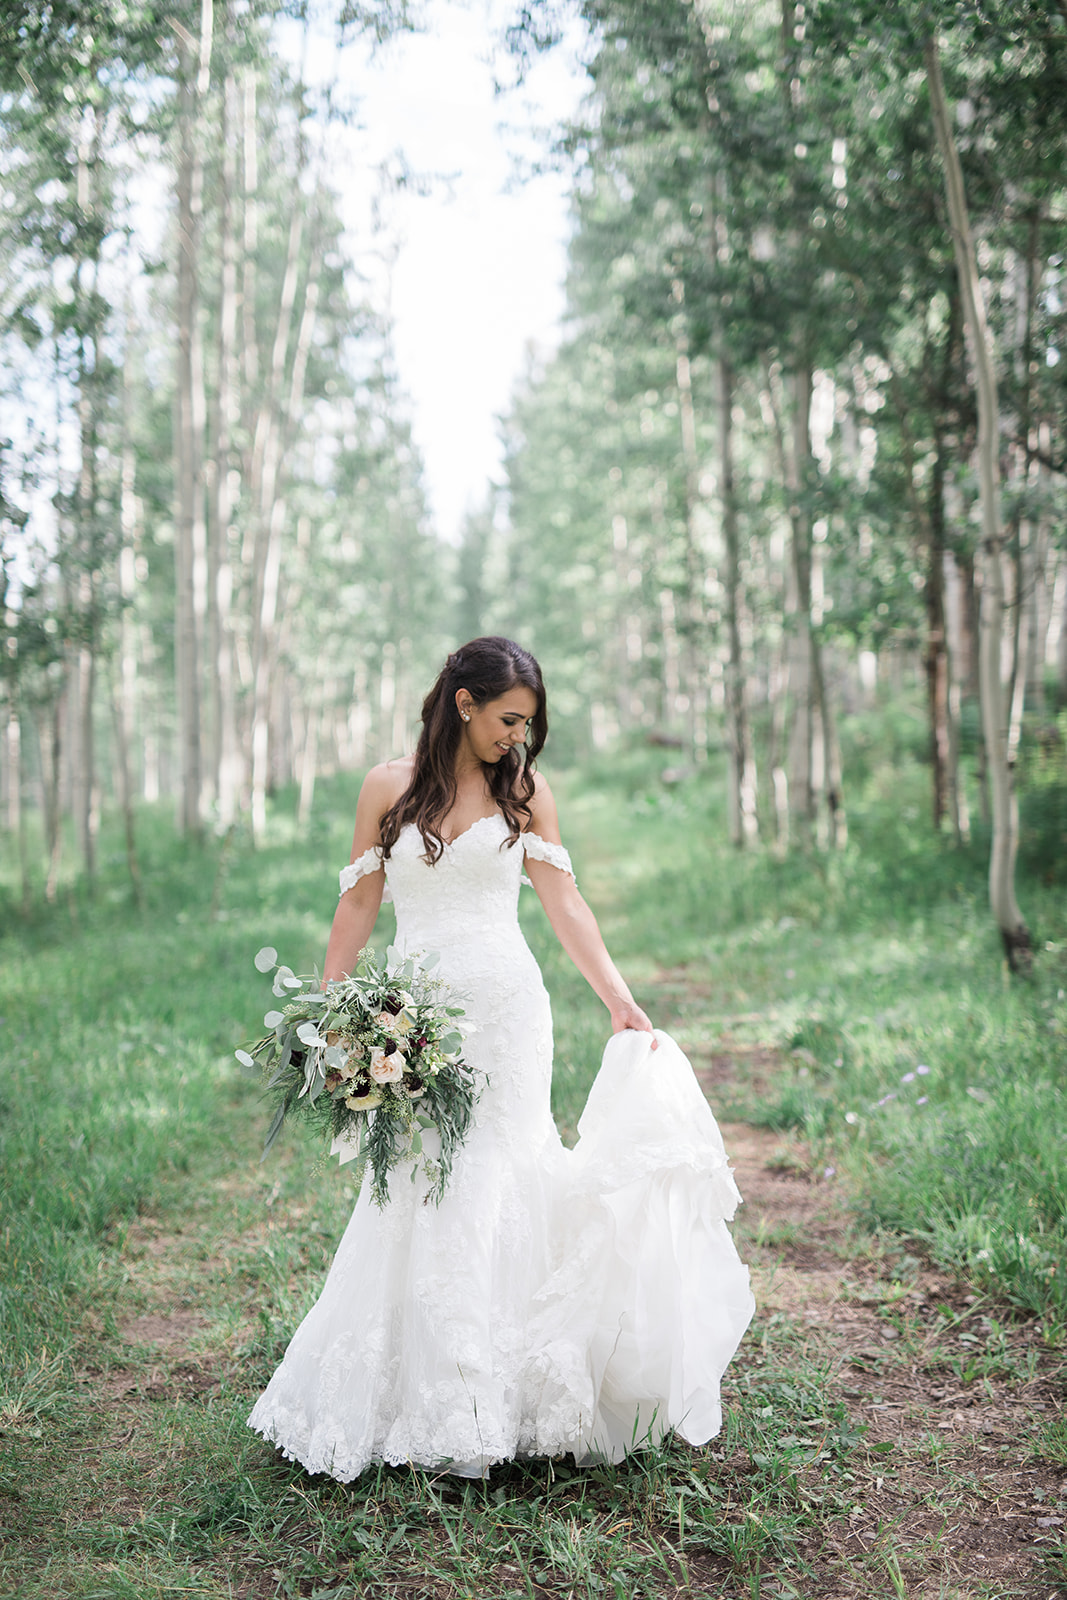 bride spins in wedding dress in Durango aspen grove